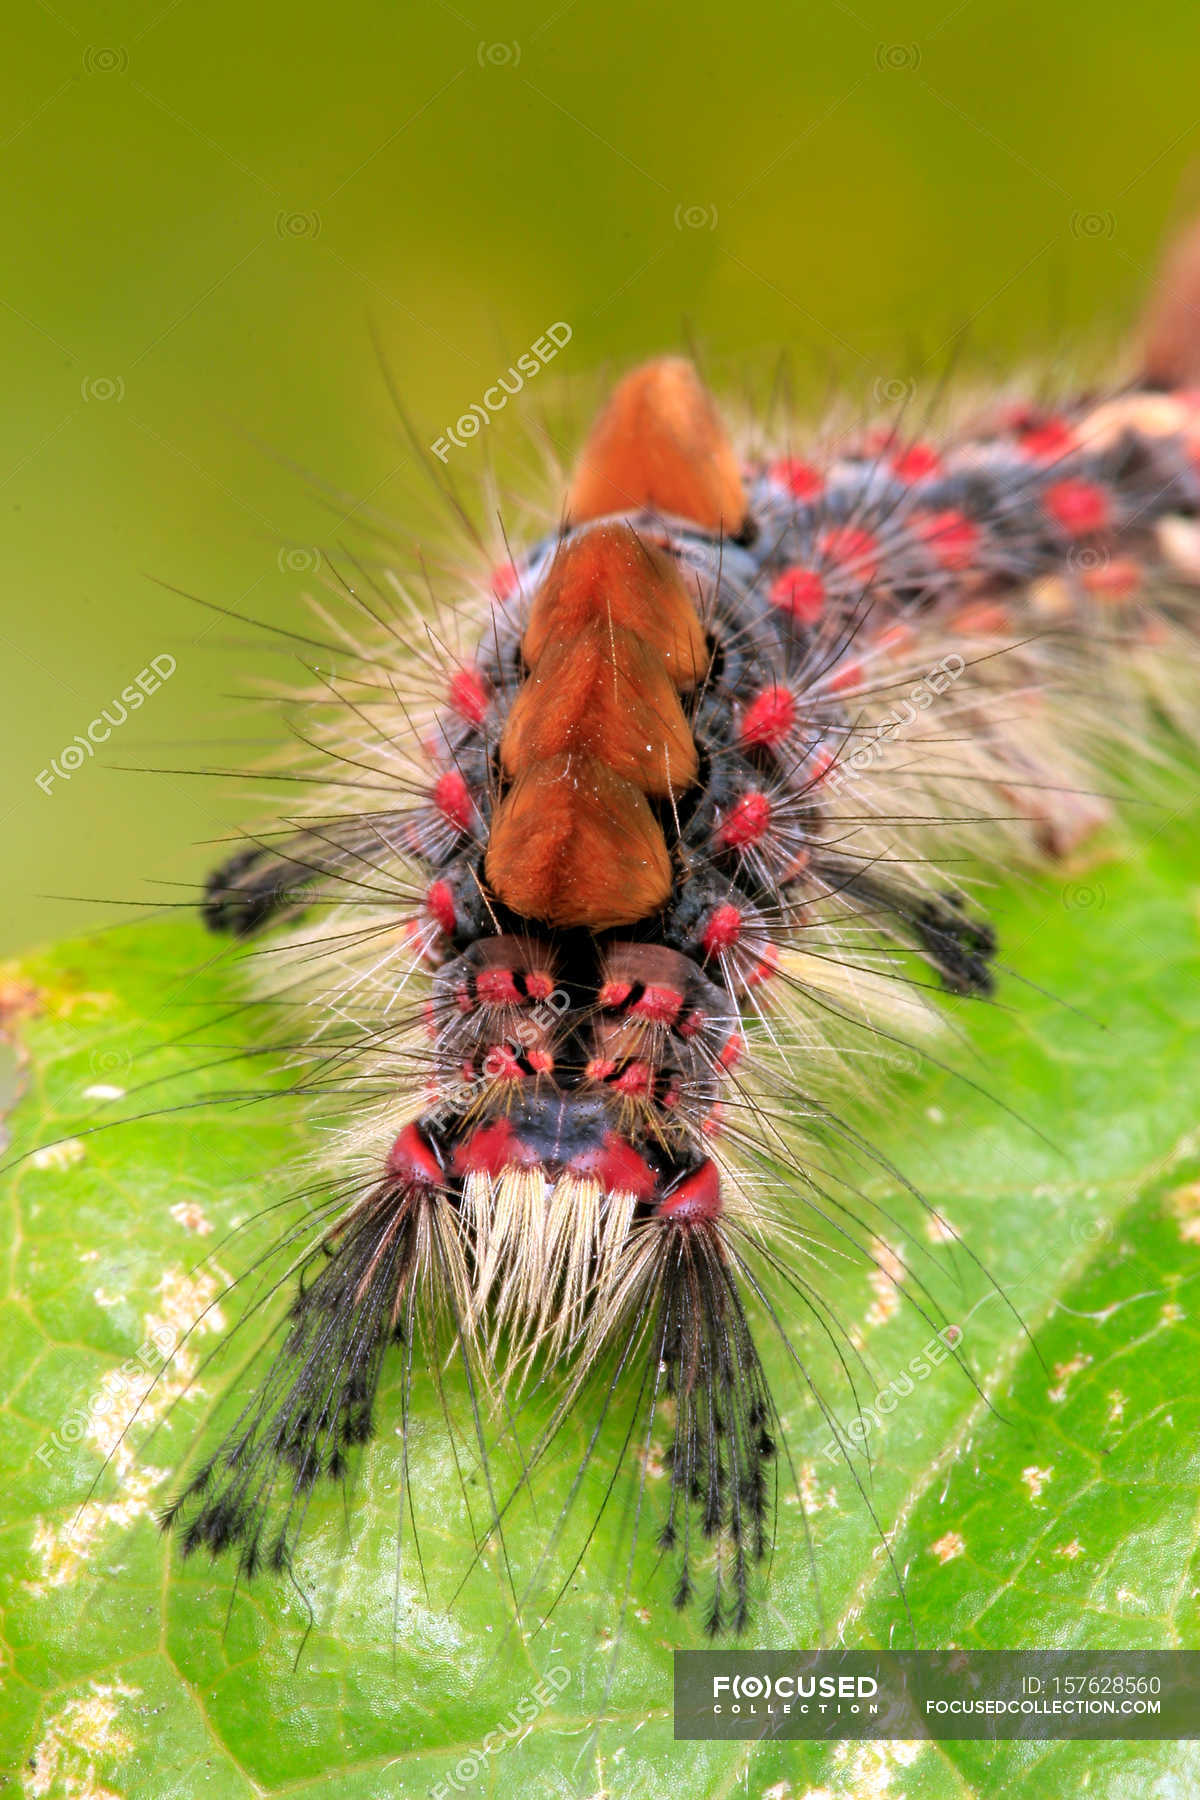 Crawling colorful caterpillar — Stock Photo | #157628560